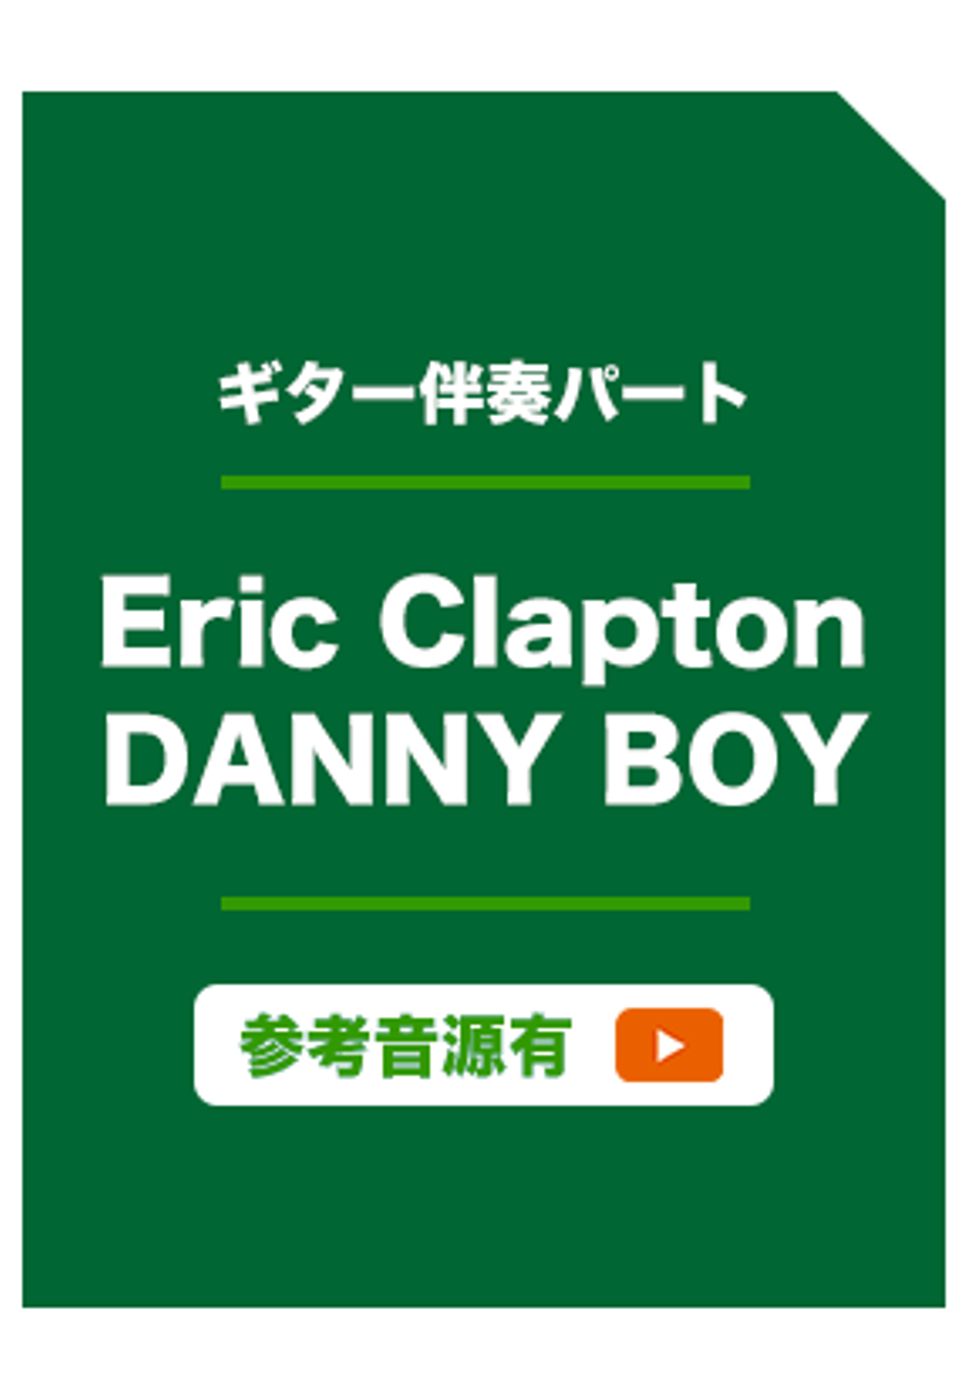 DANNY BOY (ギター伴奏) by Eric Clapton